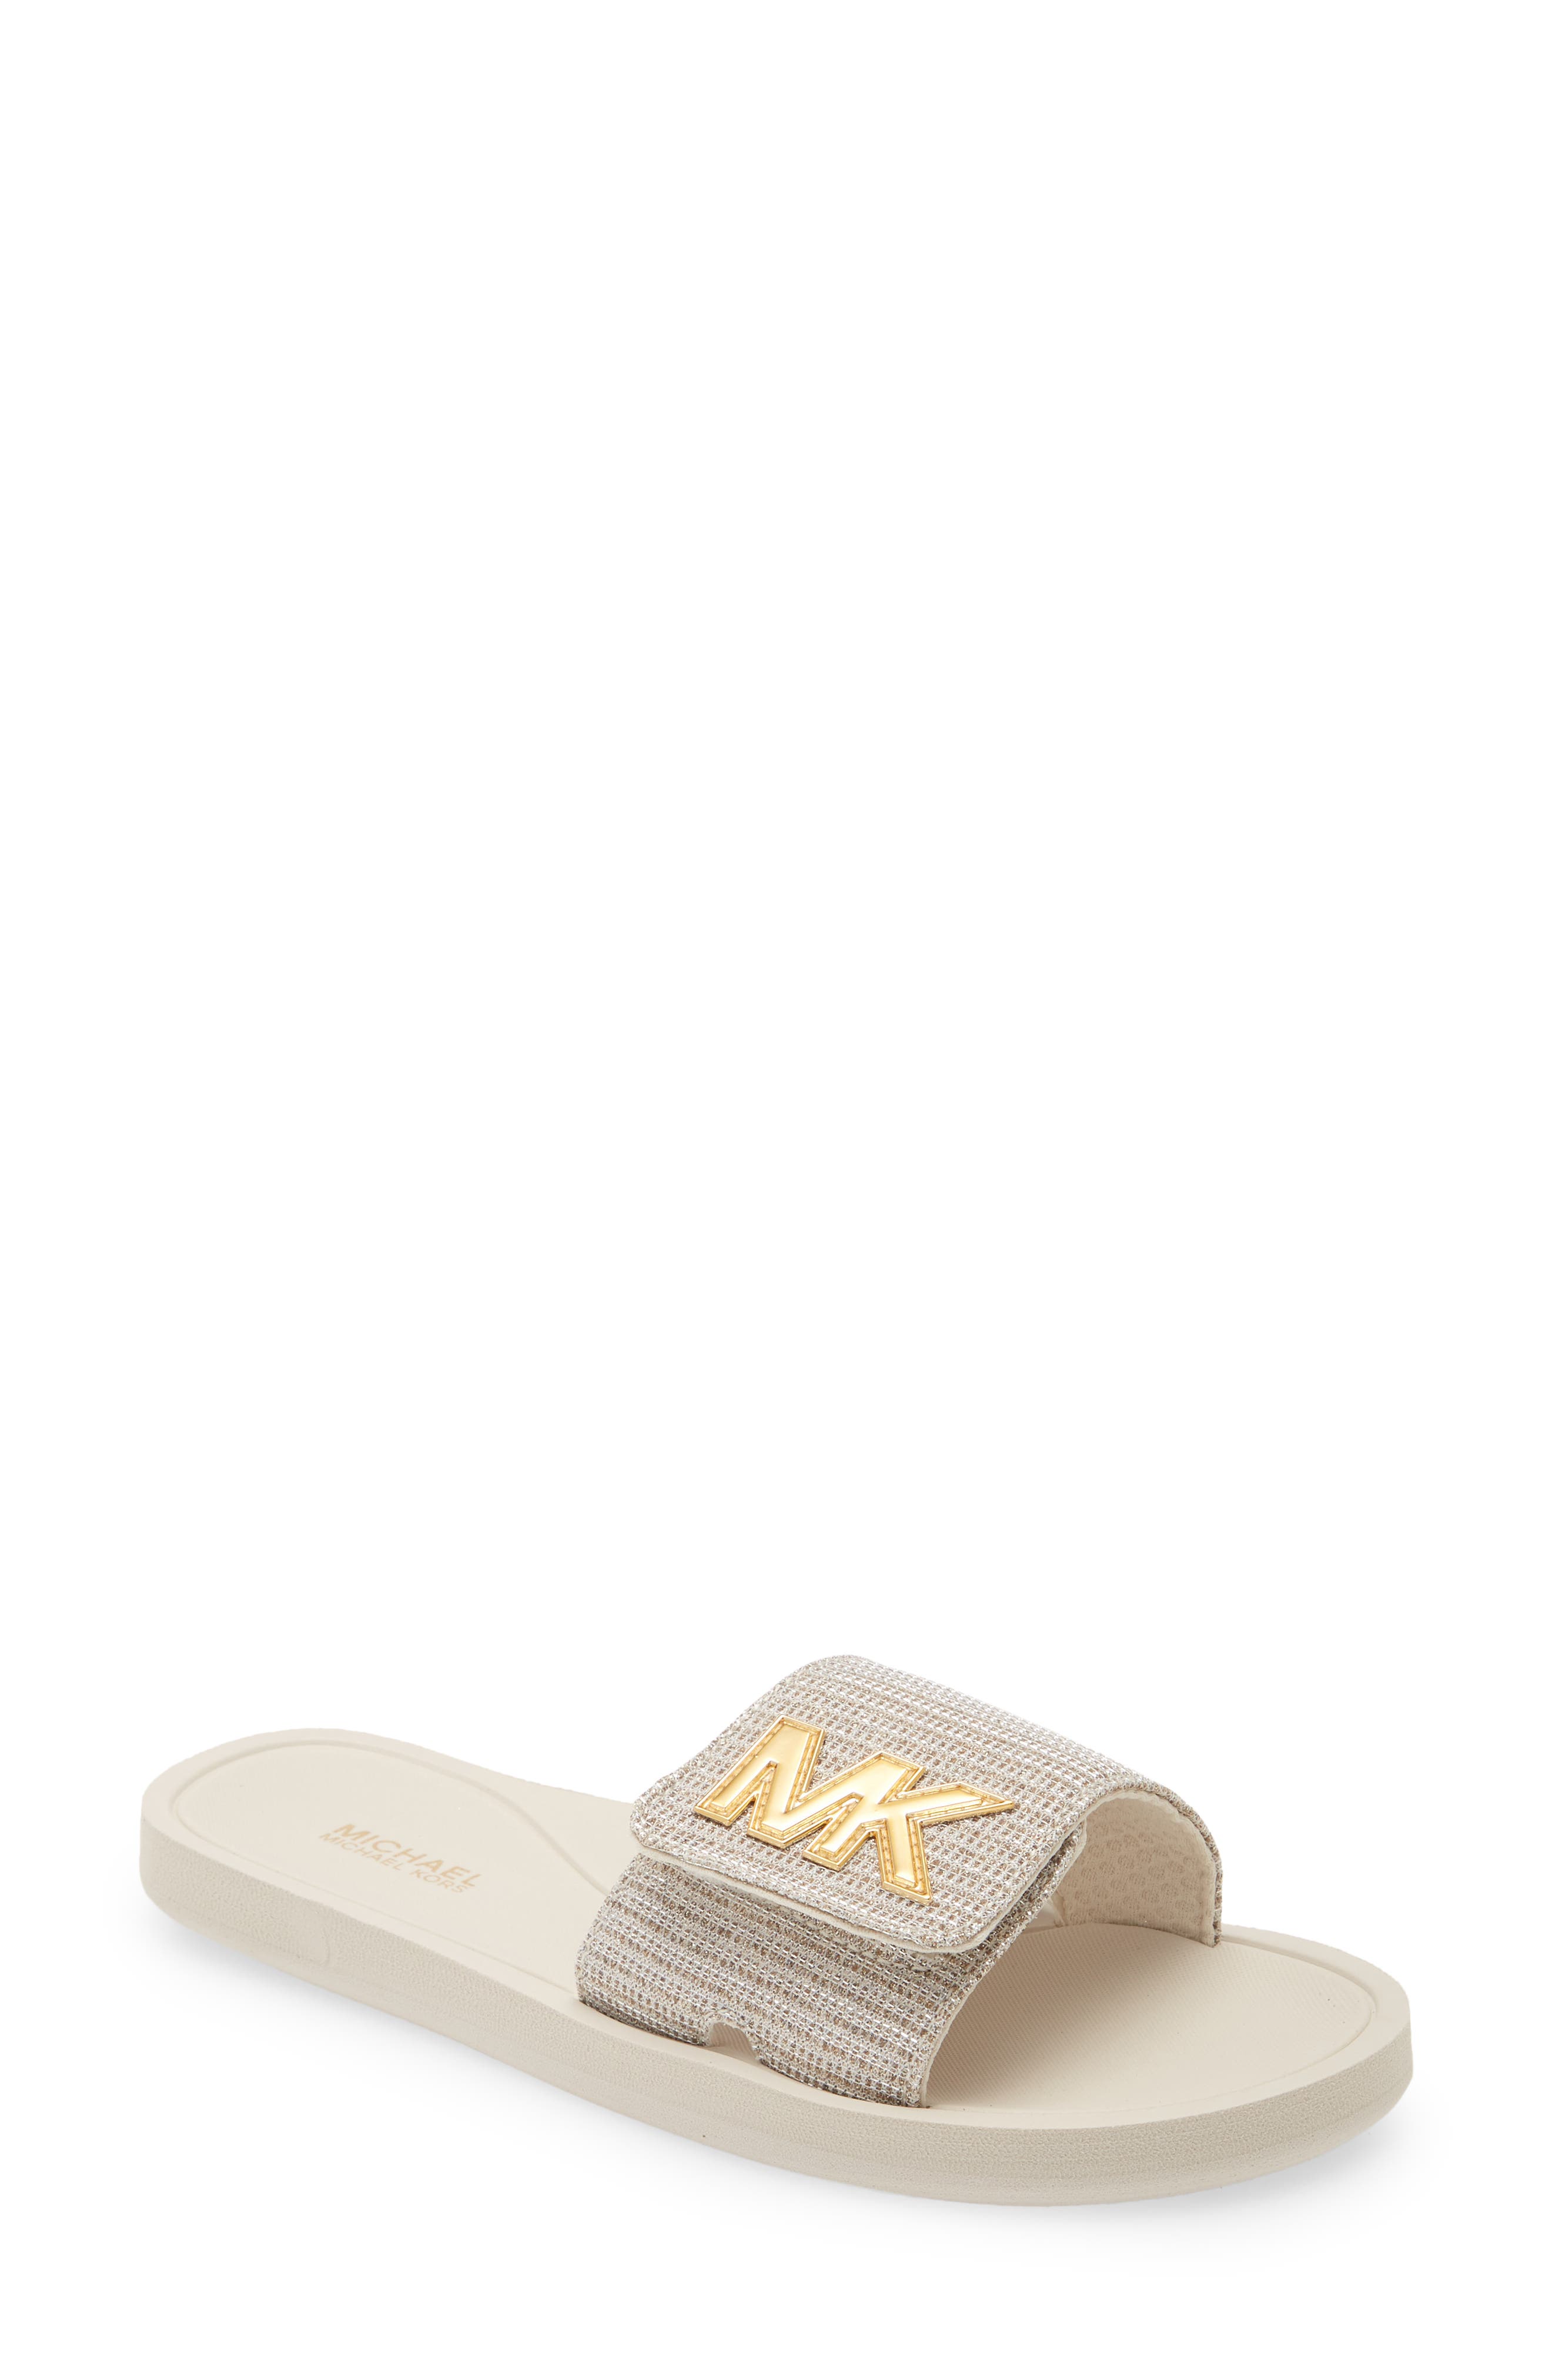 mk gold flip flops